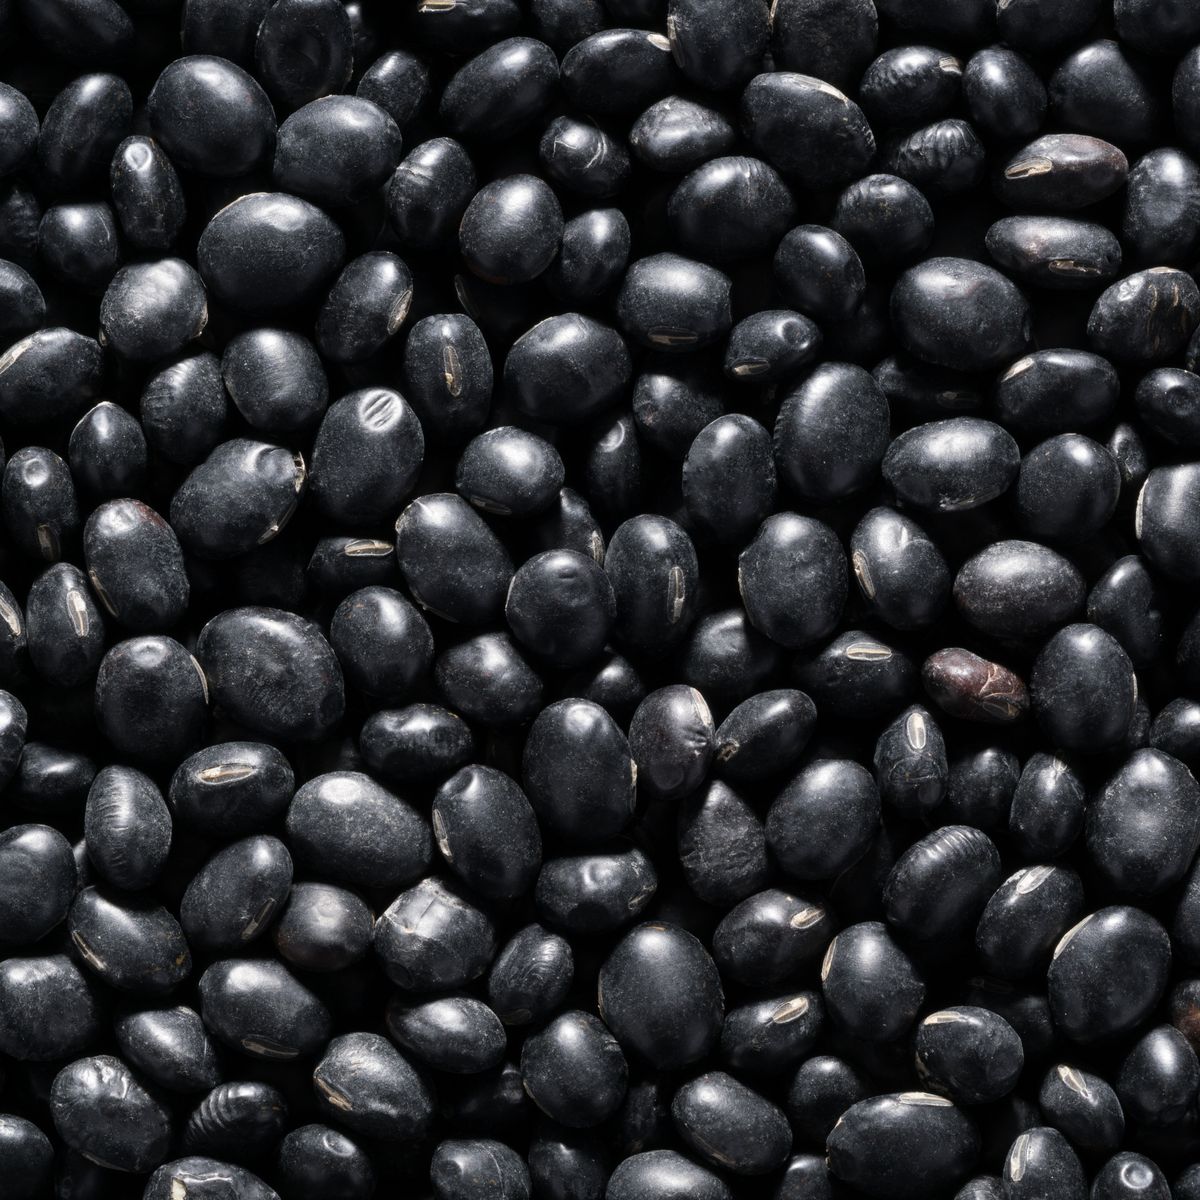 Black Beans Nutrition - Health Benefits of Black Beans